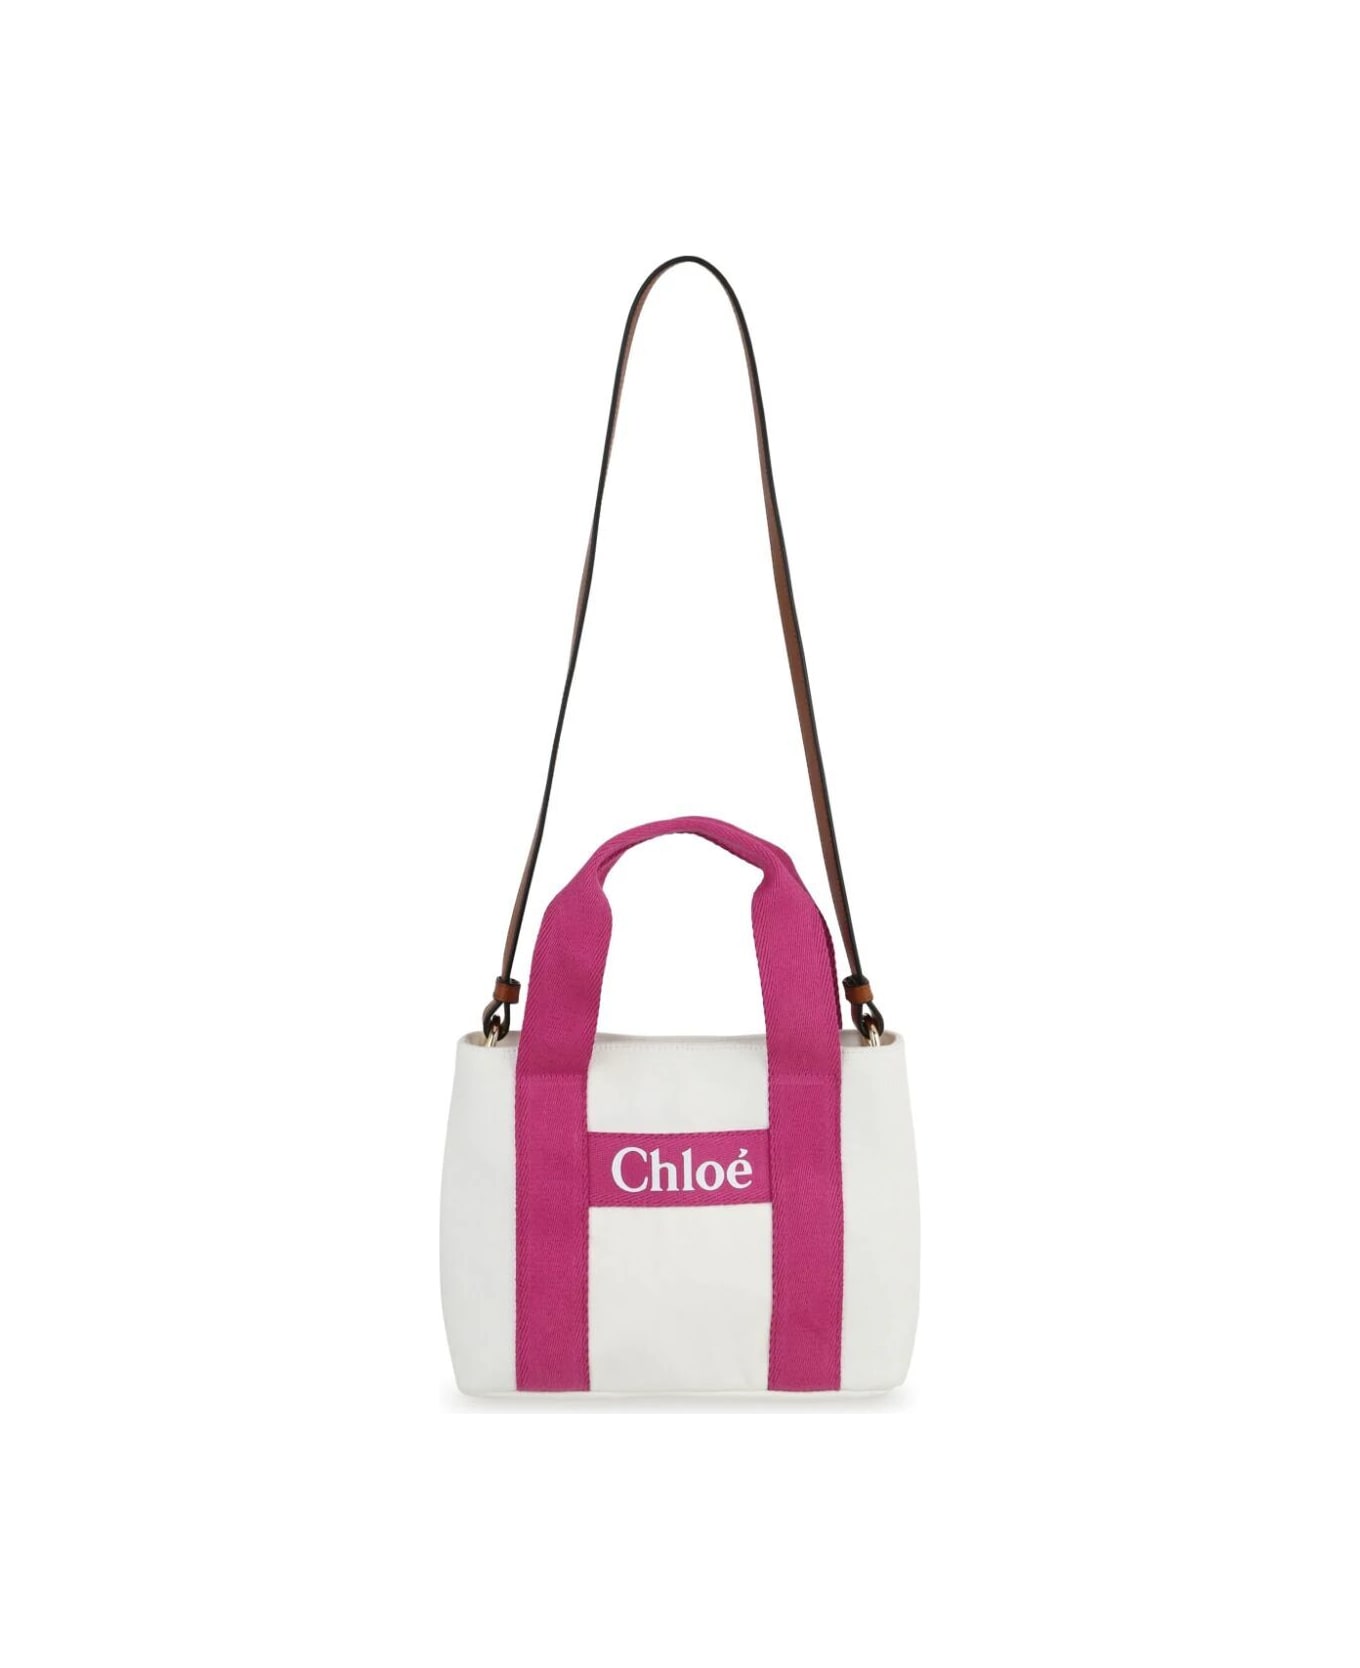 Chloé Bag - Off White